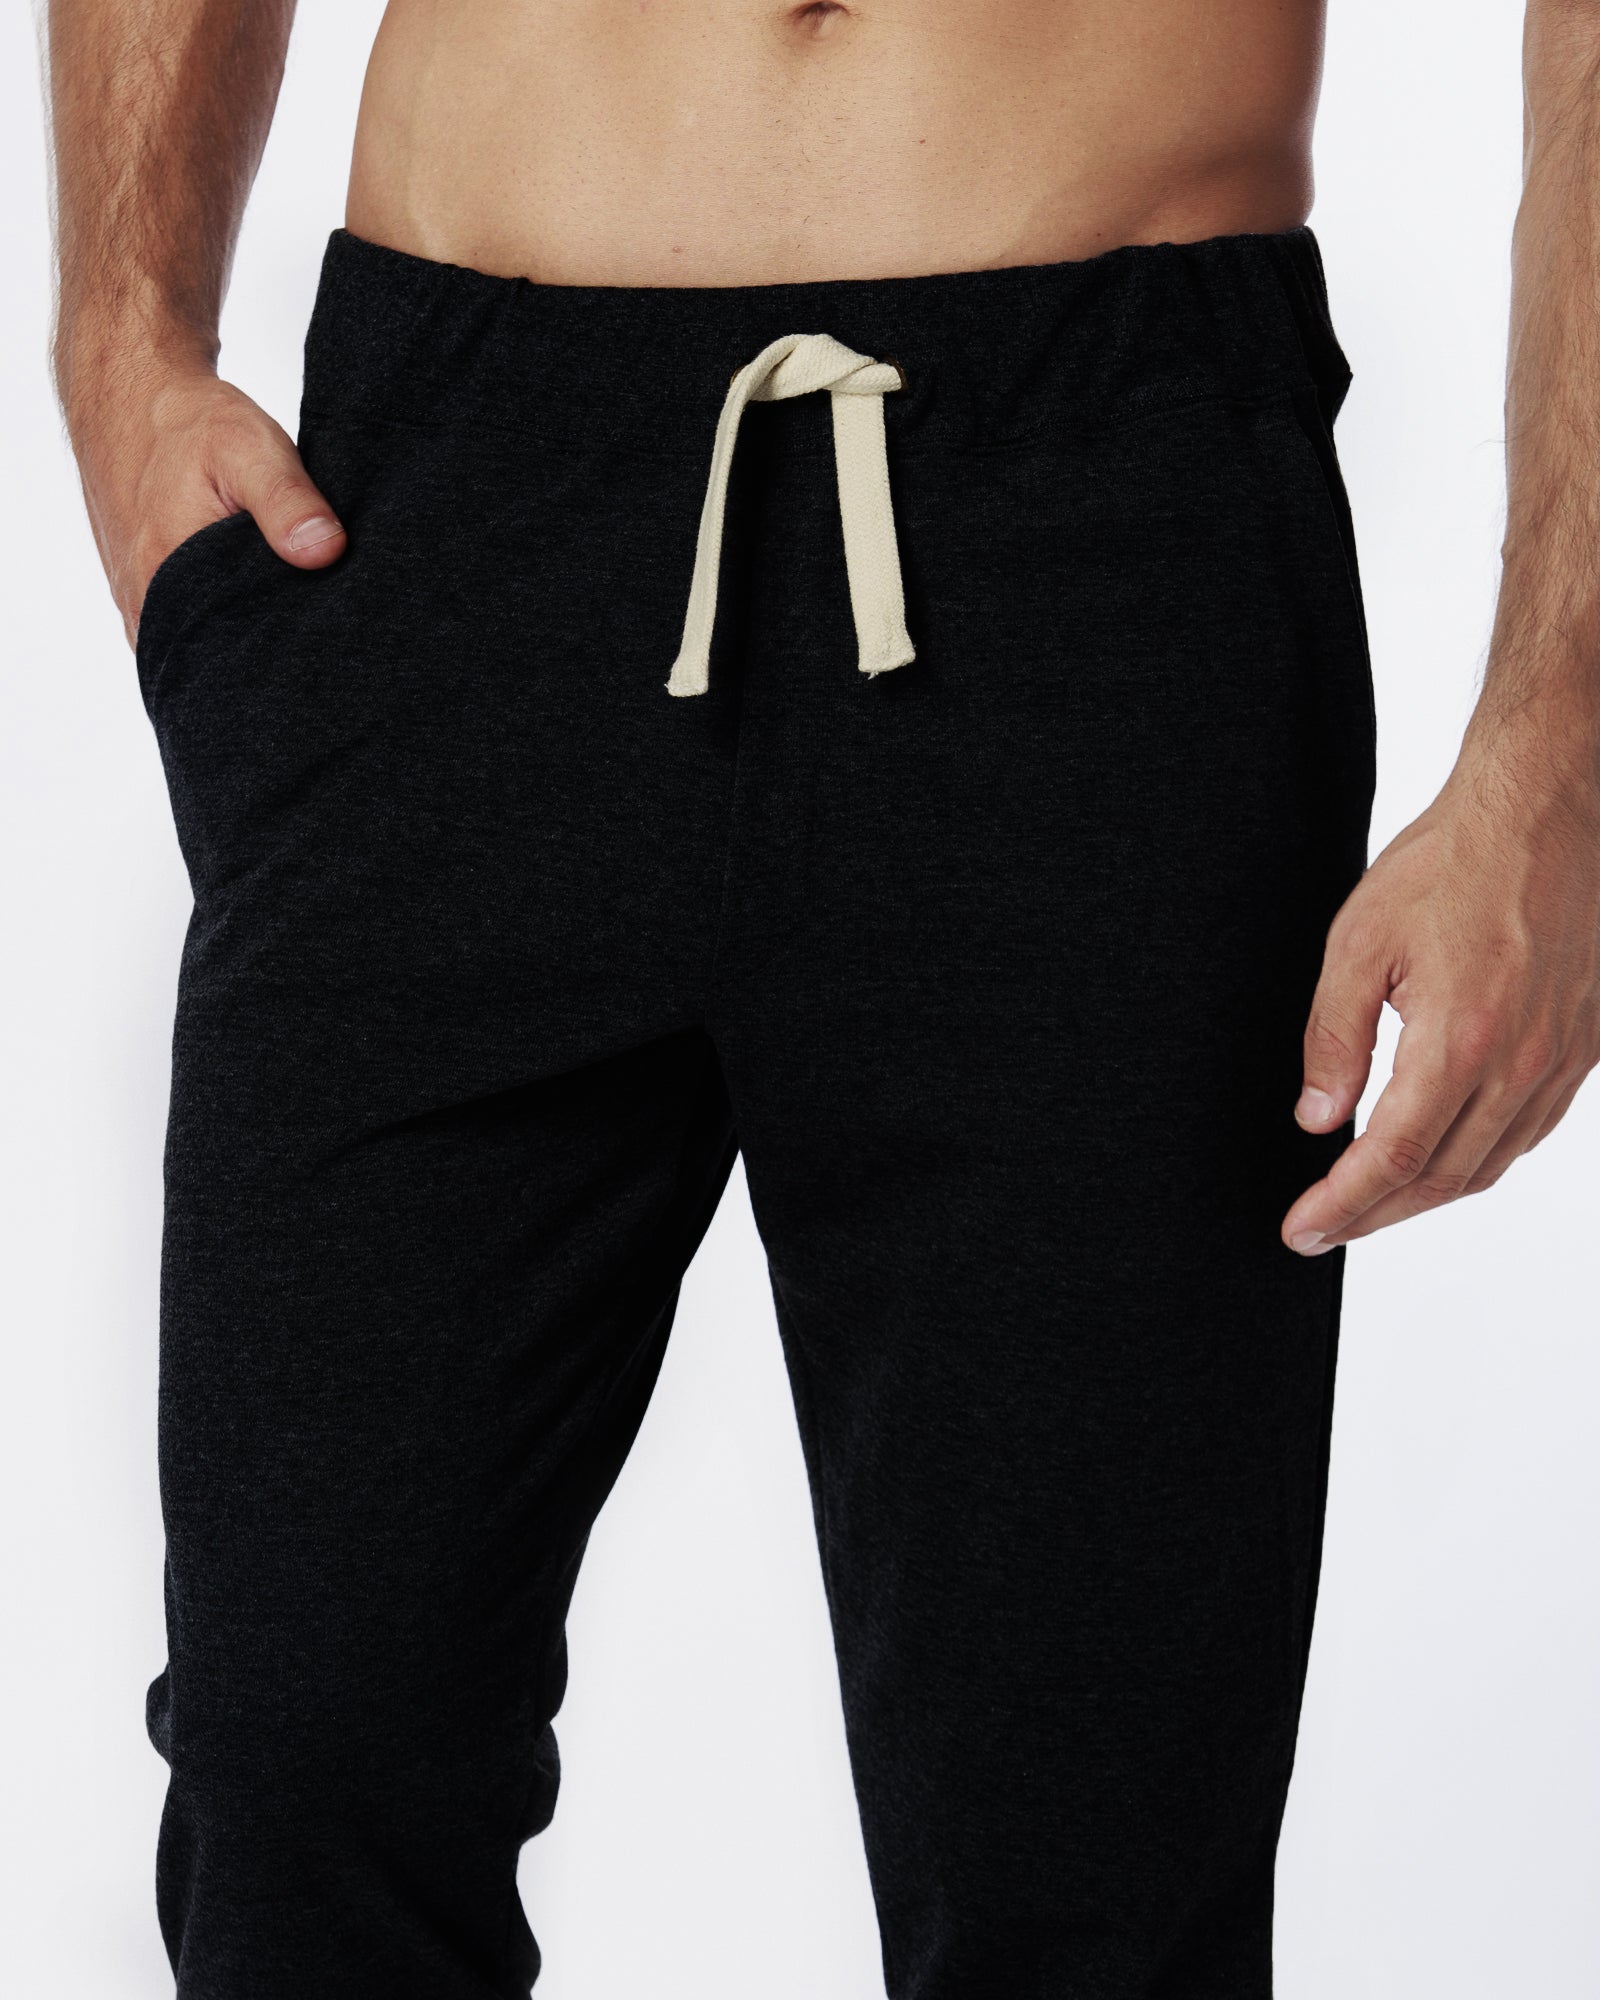 Pantalon frisa rústica1925 – Eyelit Underwear